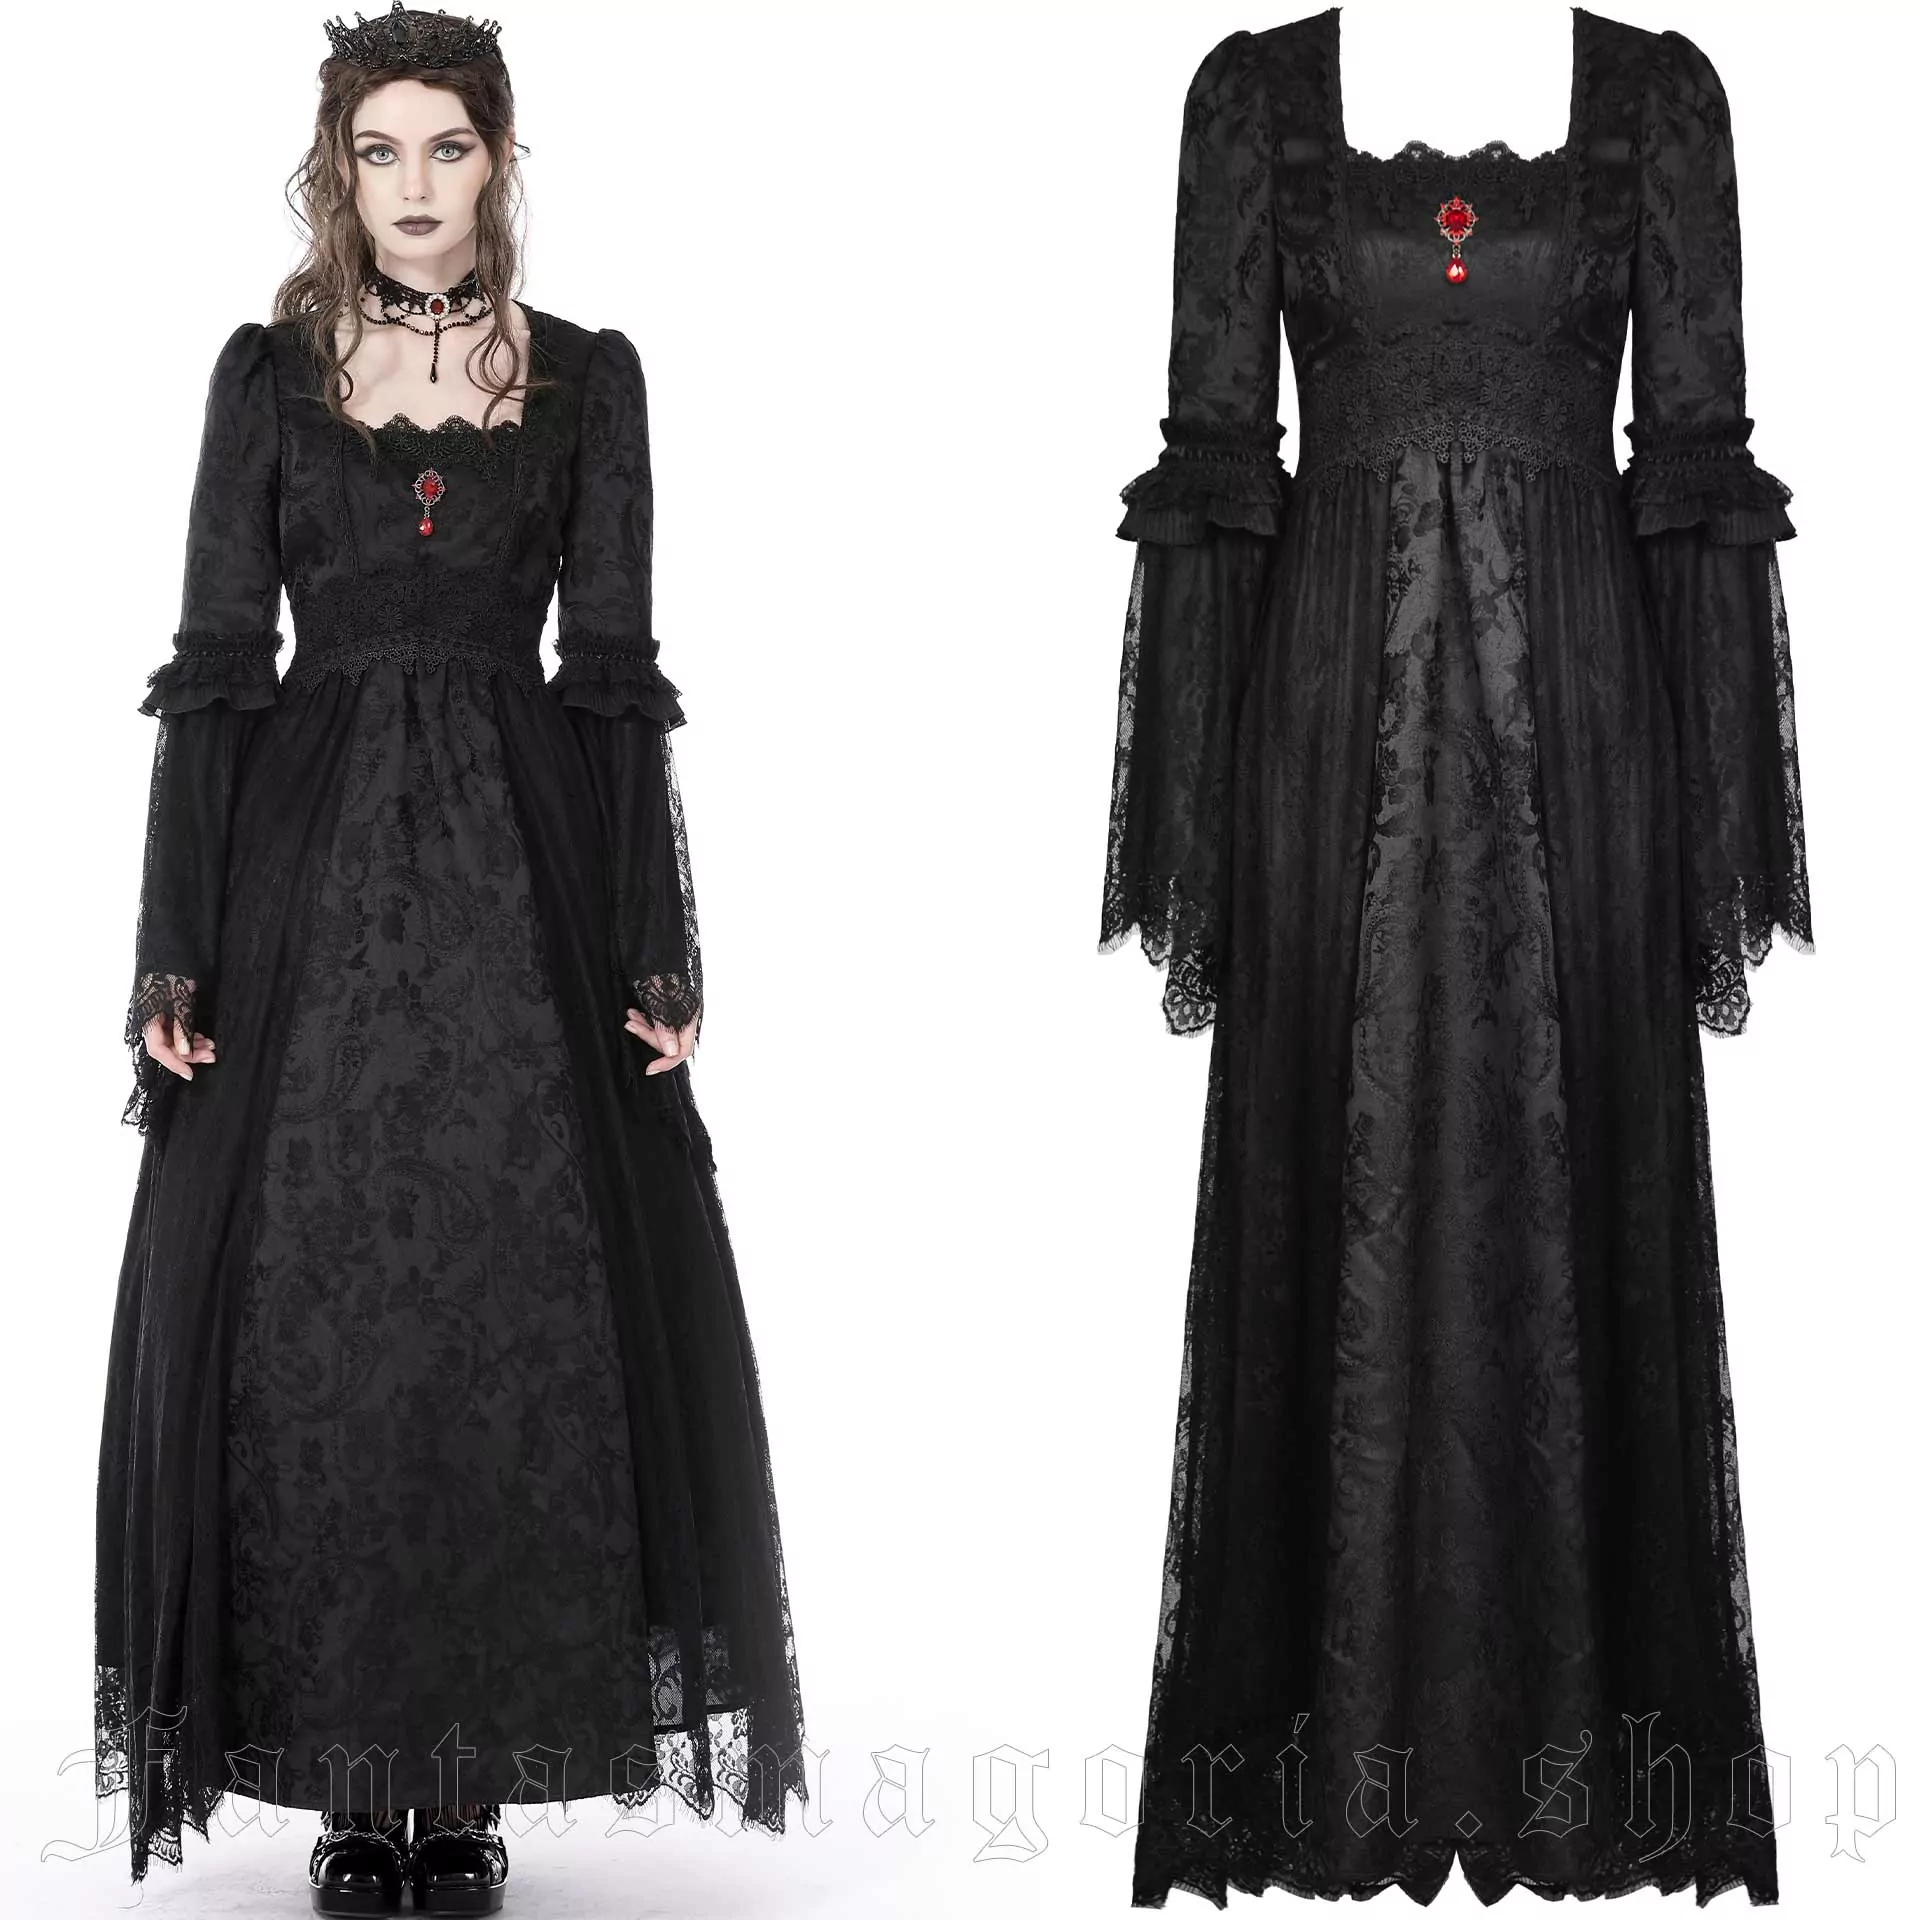 Victorian Gothic long black brocade dress.